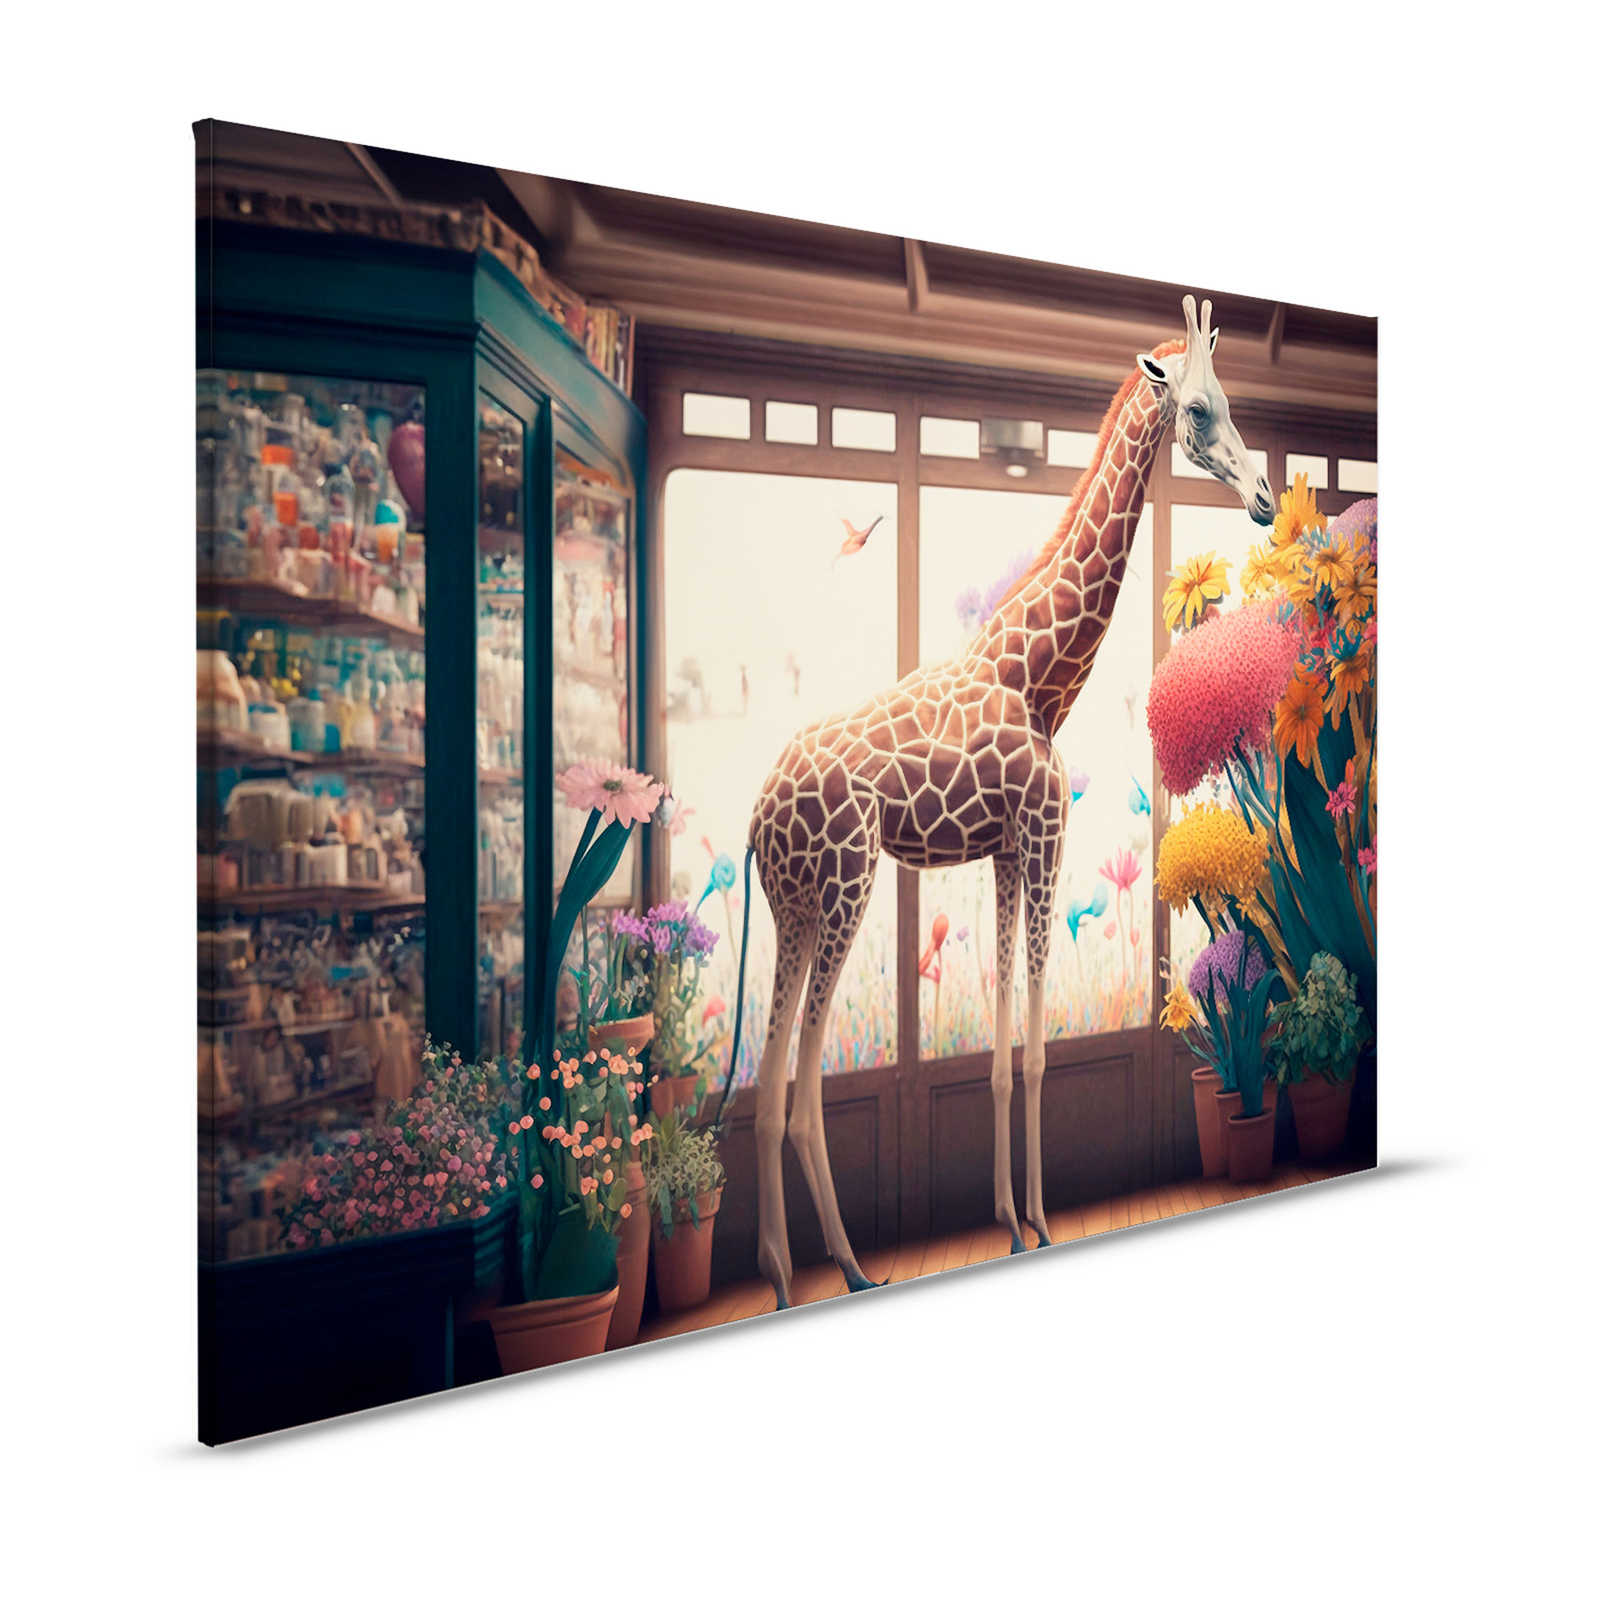 KI Cuadro »jirafa flor« - 120 cm x 80 cm
